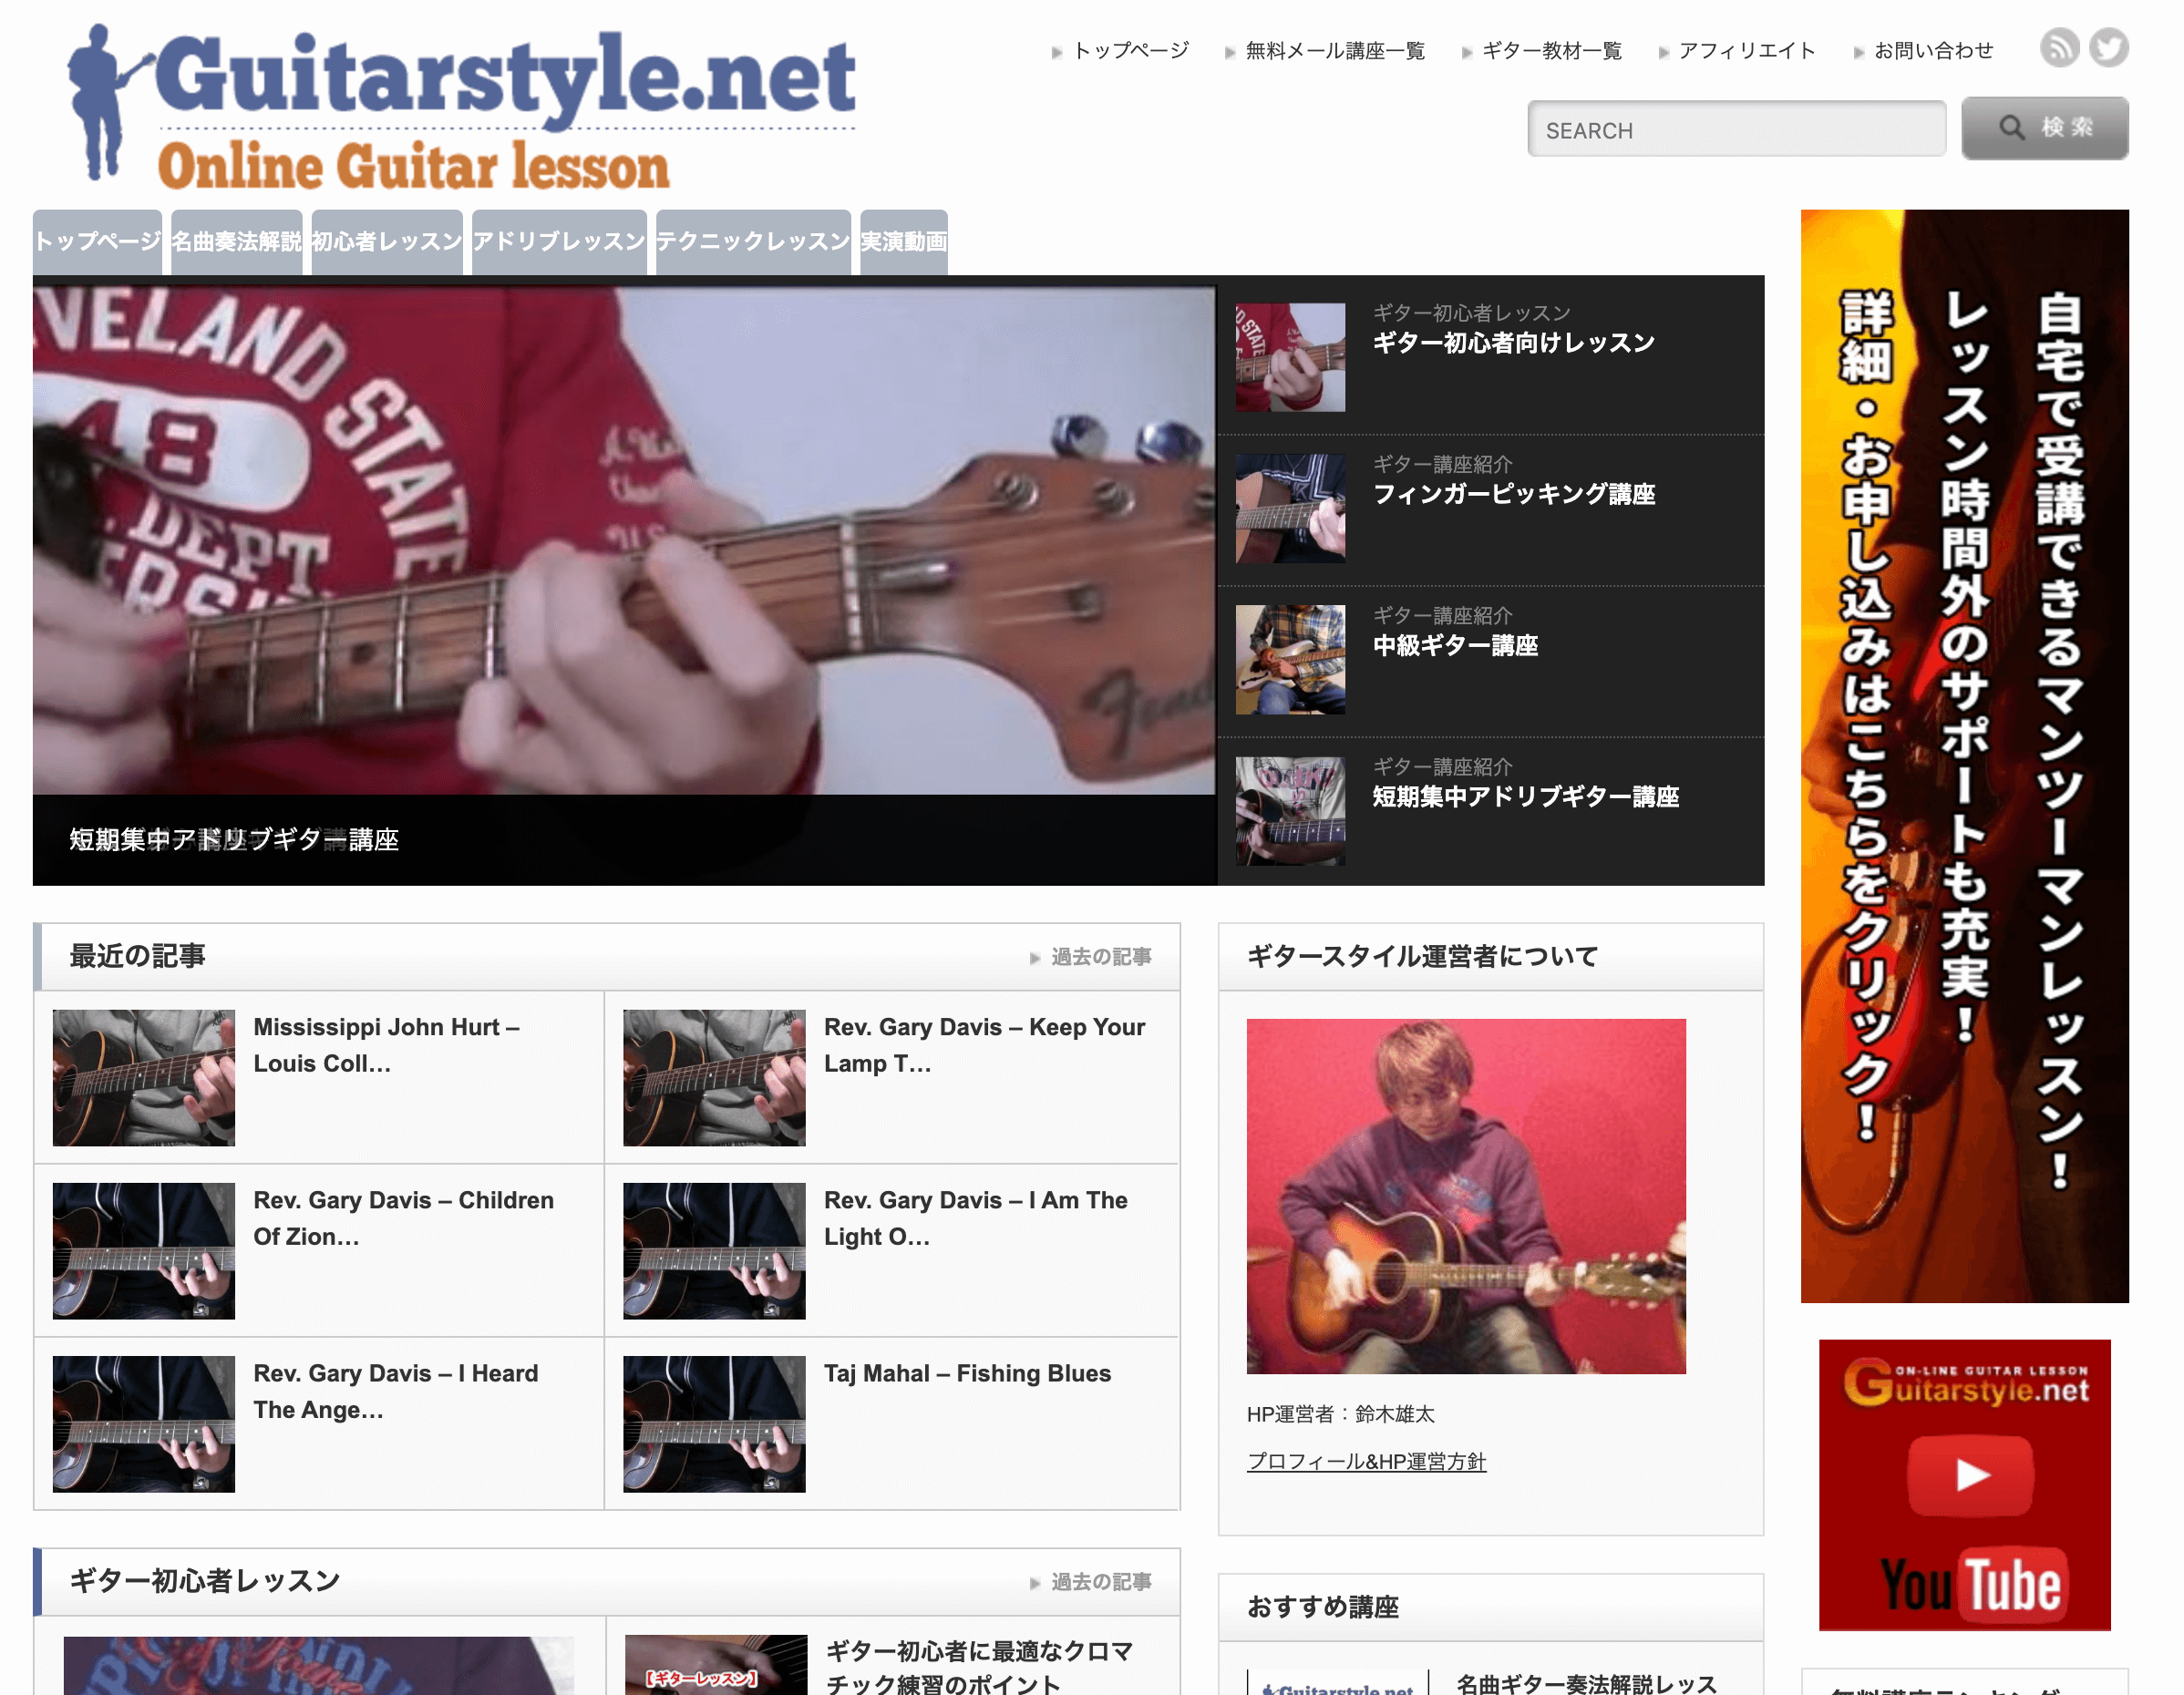 GuitarStyleNet